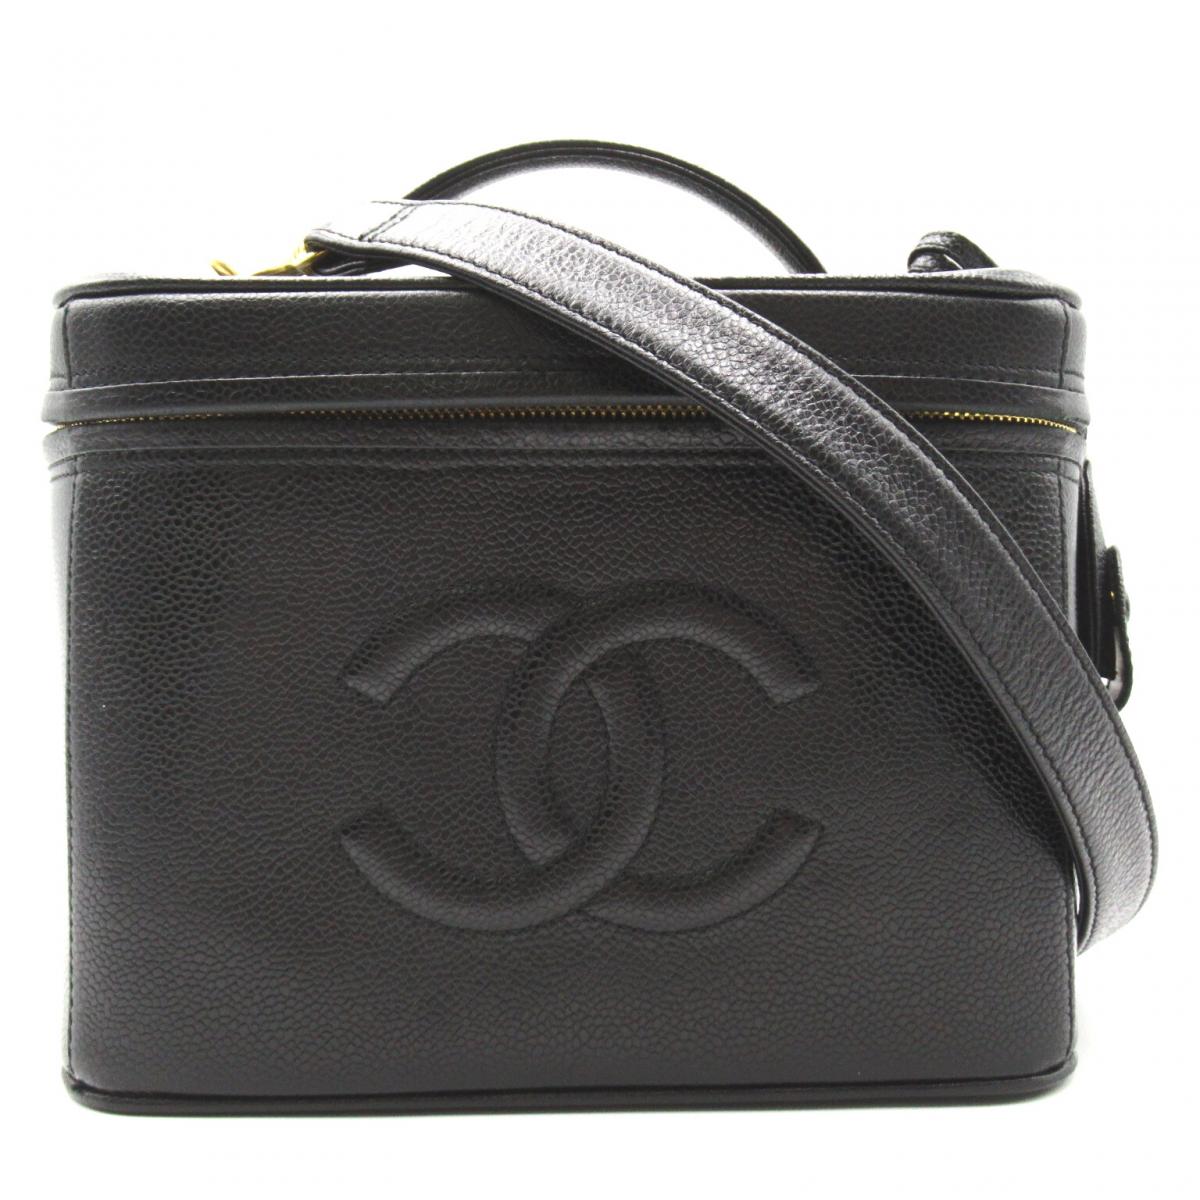 CC Vanity Bag with Strap